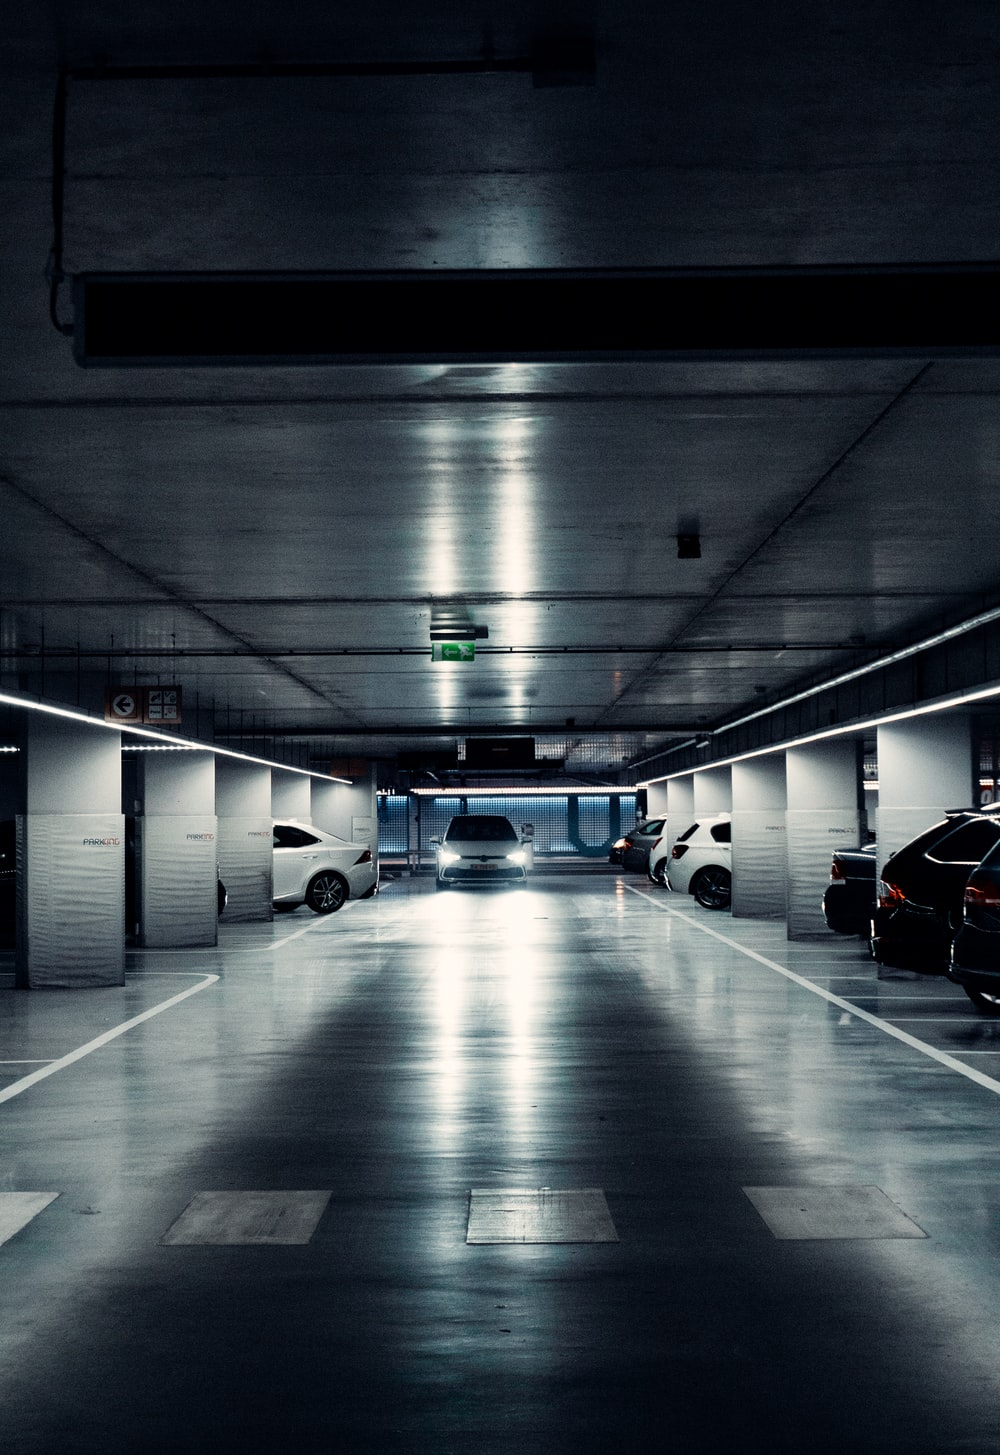 Parking Garage Picture. Download Free Image